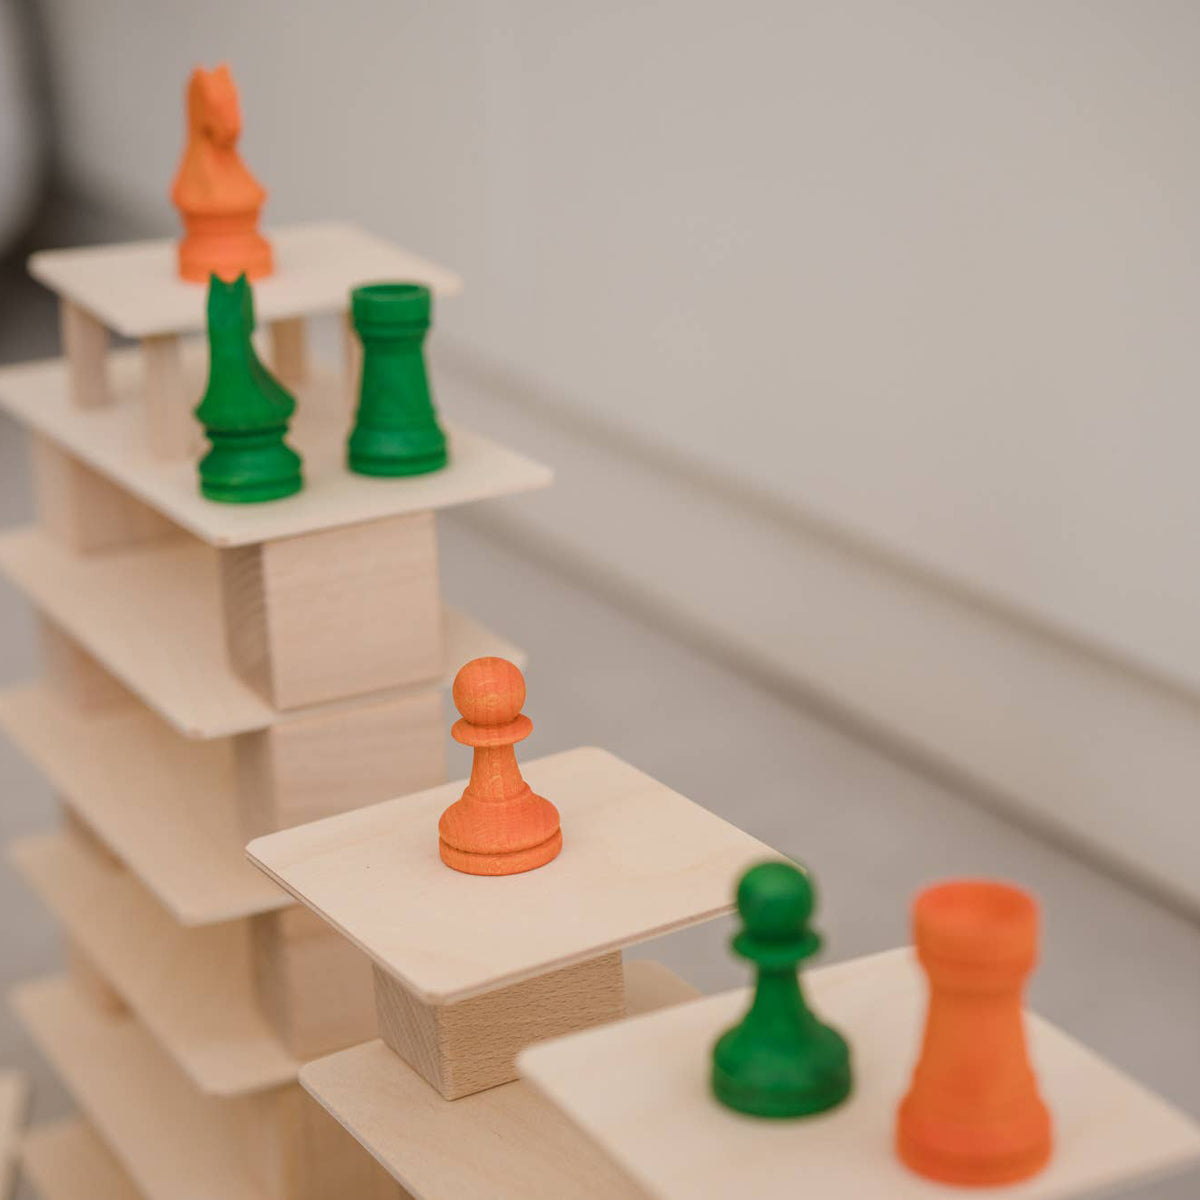 English model MINIATURE chess pieces - Mora Toys · Games